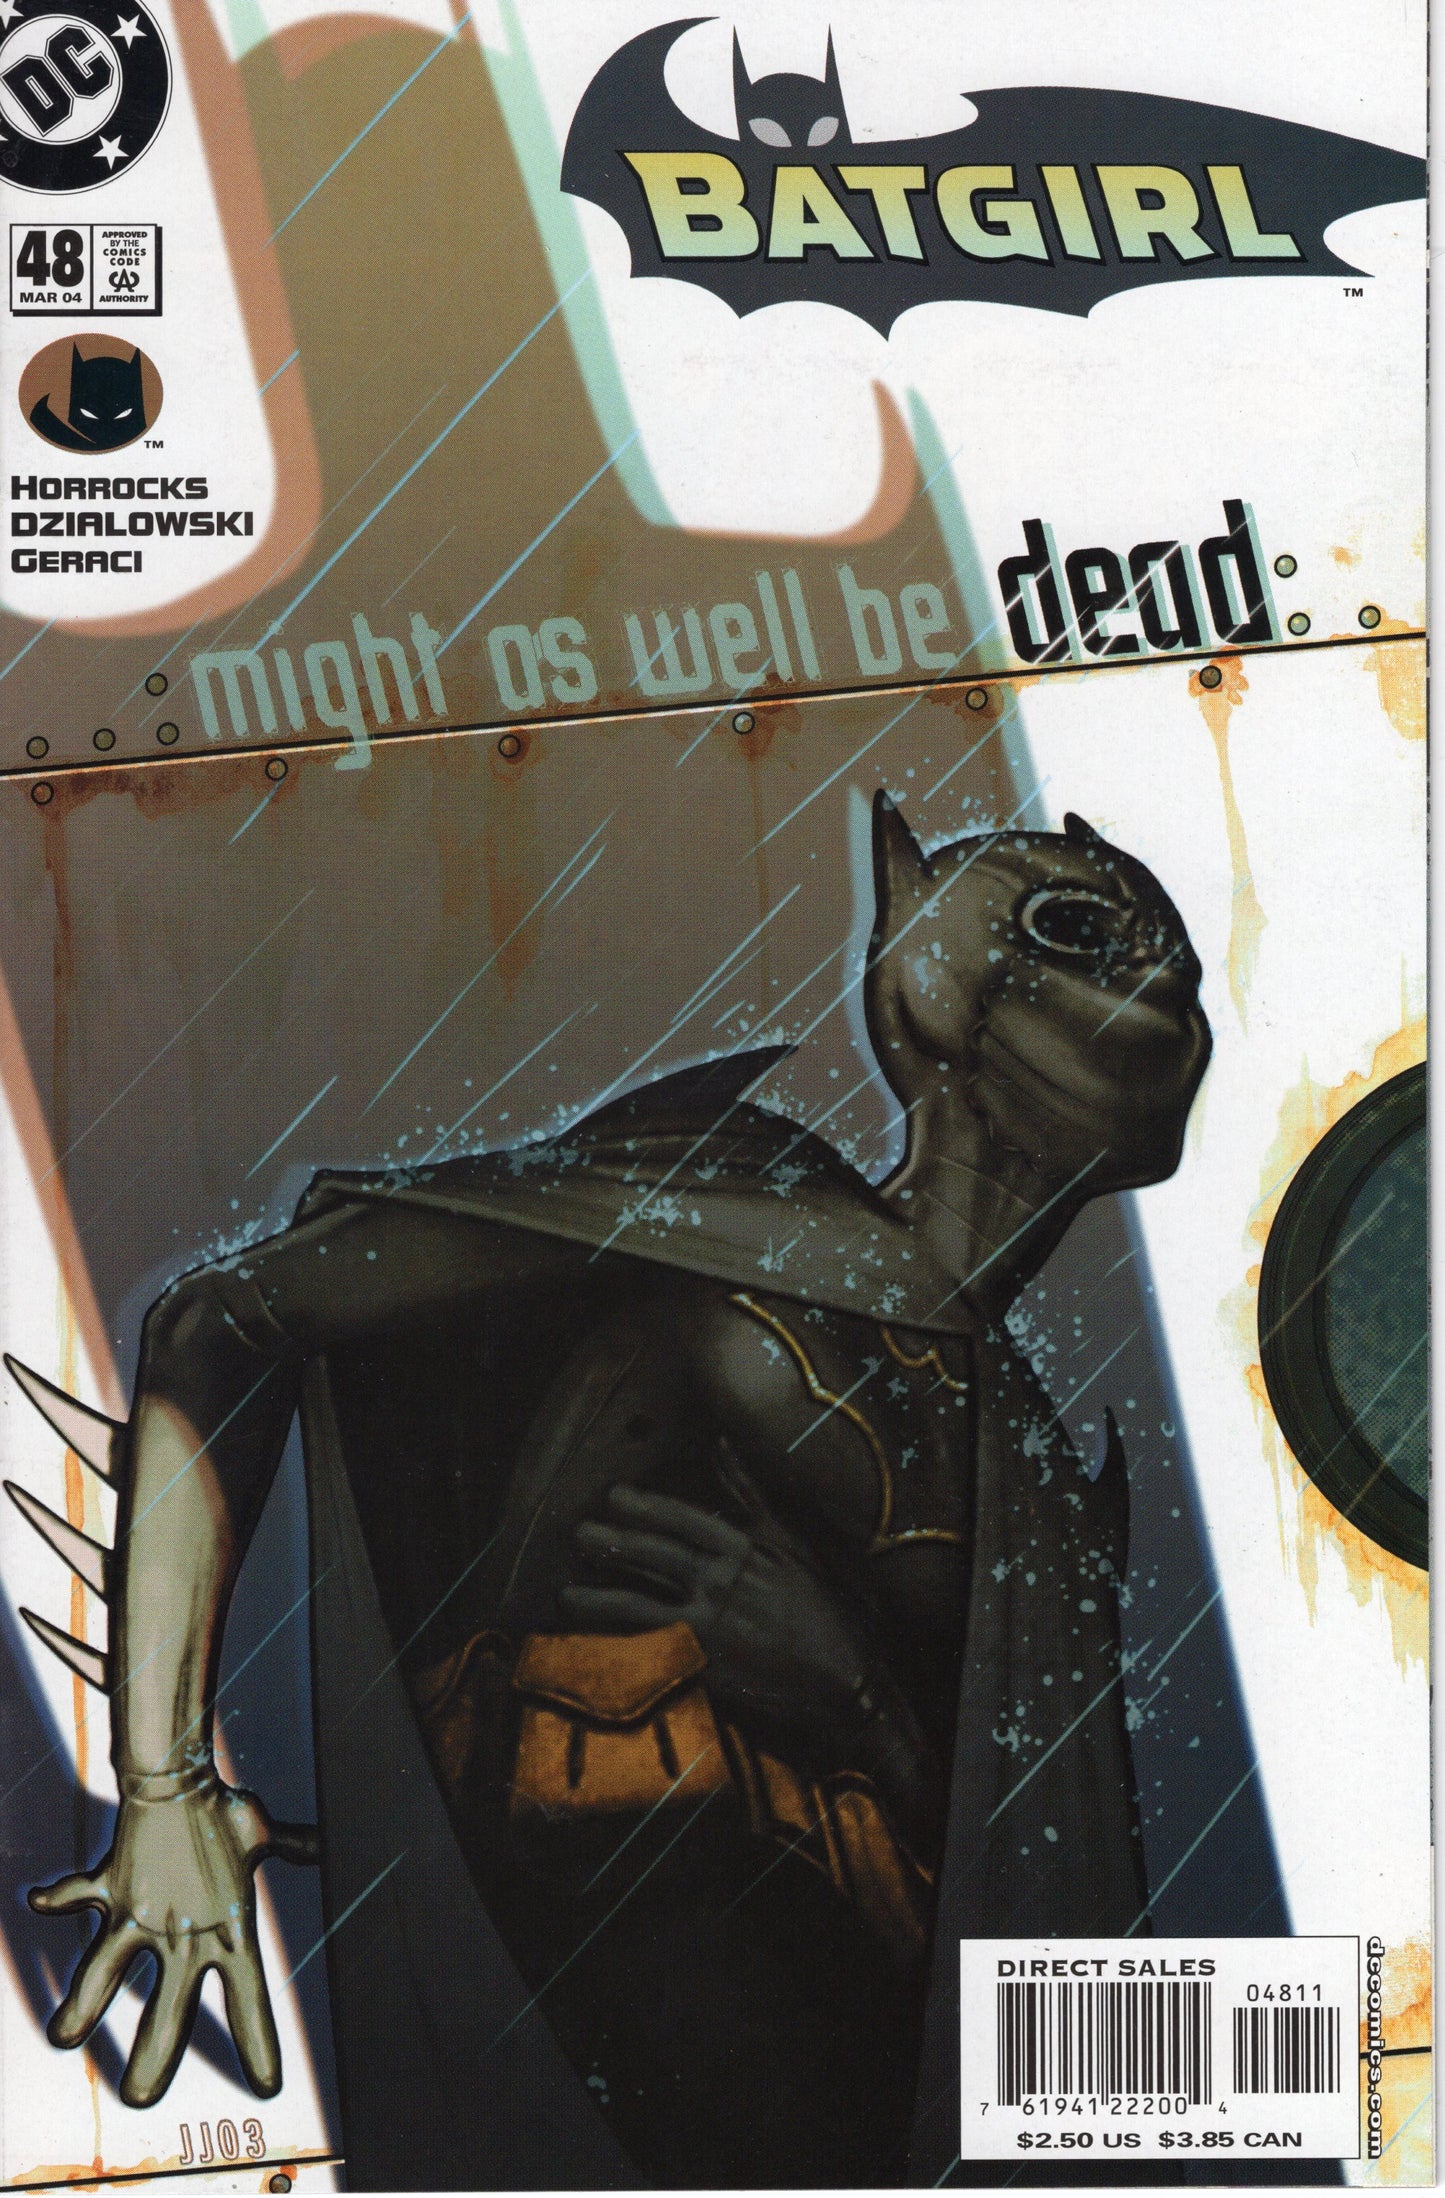 Batgirl - Issue #48 (March, 2004 - DC Comics) NM